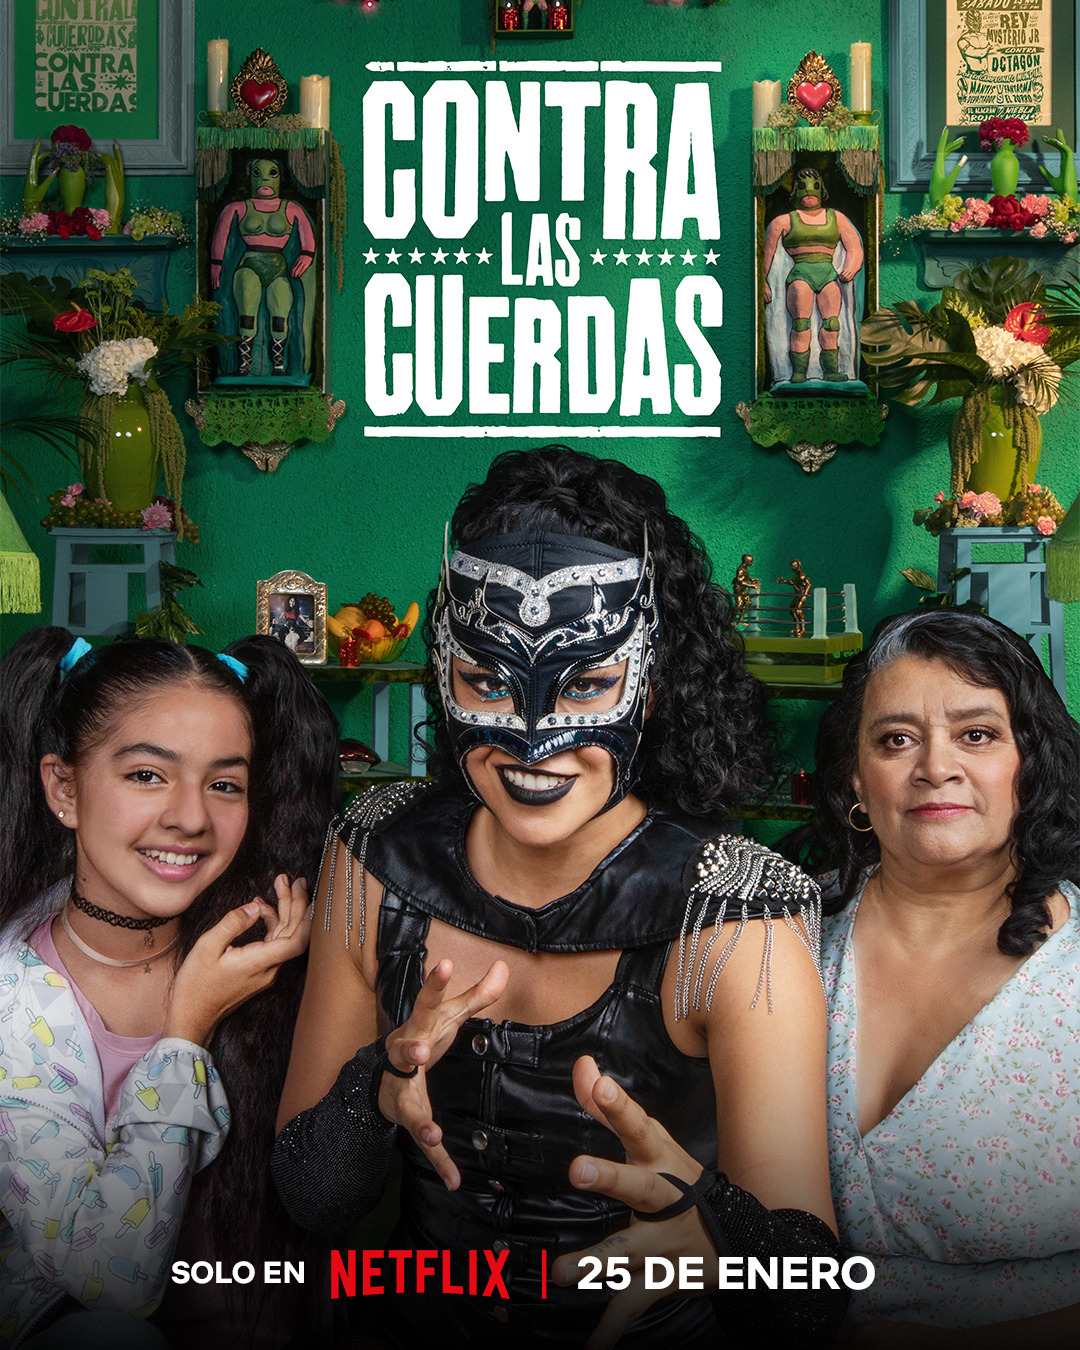 Extra Large TV Poster Image for Contra las cuerdas 